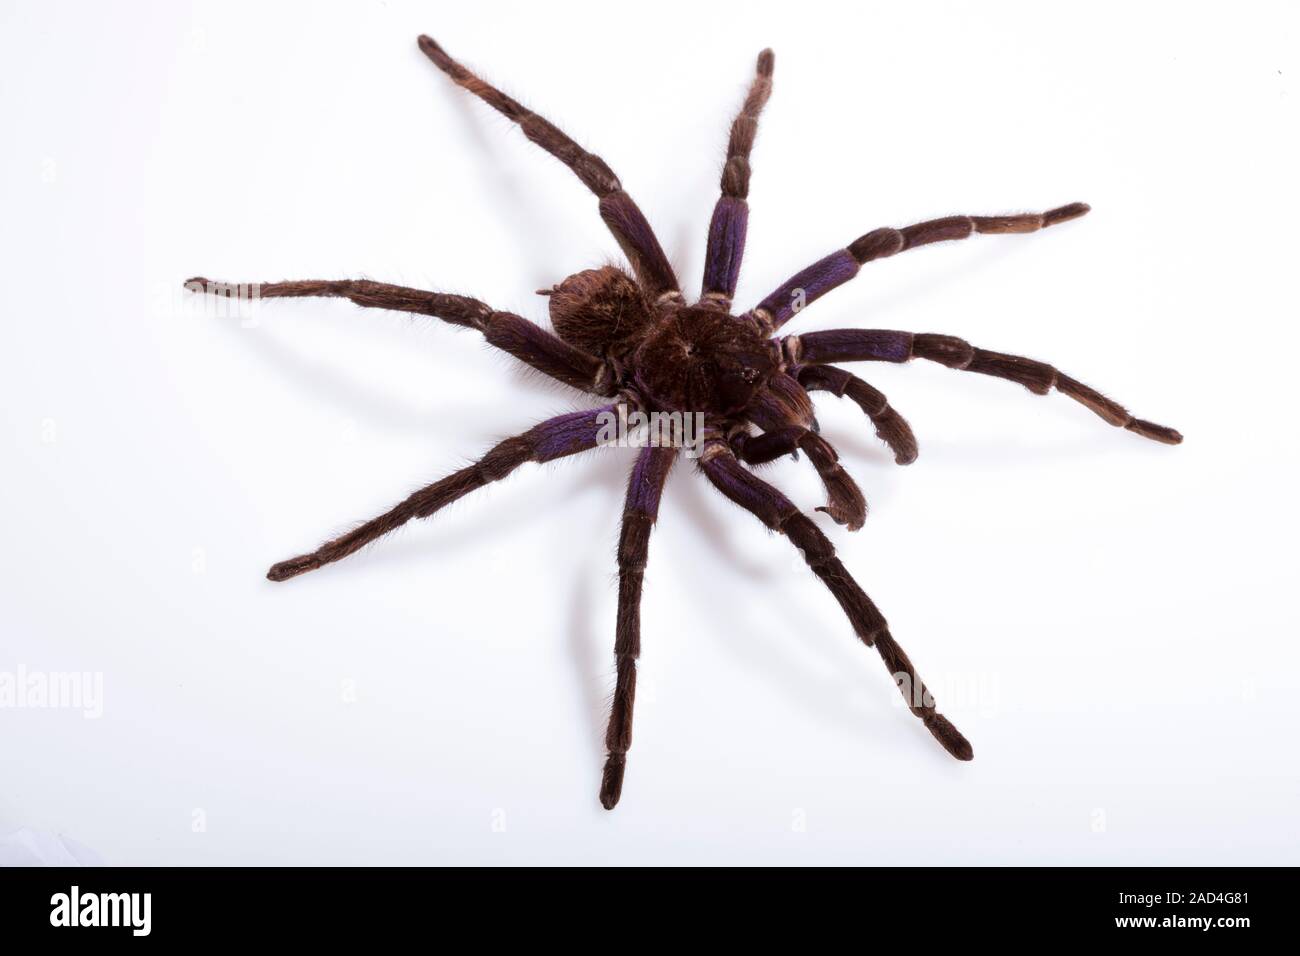 Pamphobeteus tarantula (Pamphobeteus antinous). This large spider is native to Peru. The specimen shown here is about 18 centimetres across. Stock Photo